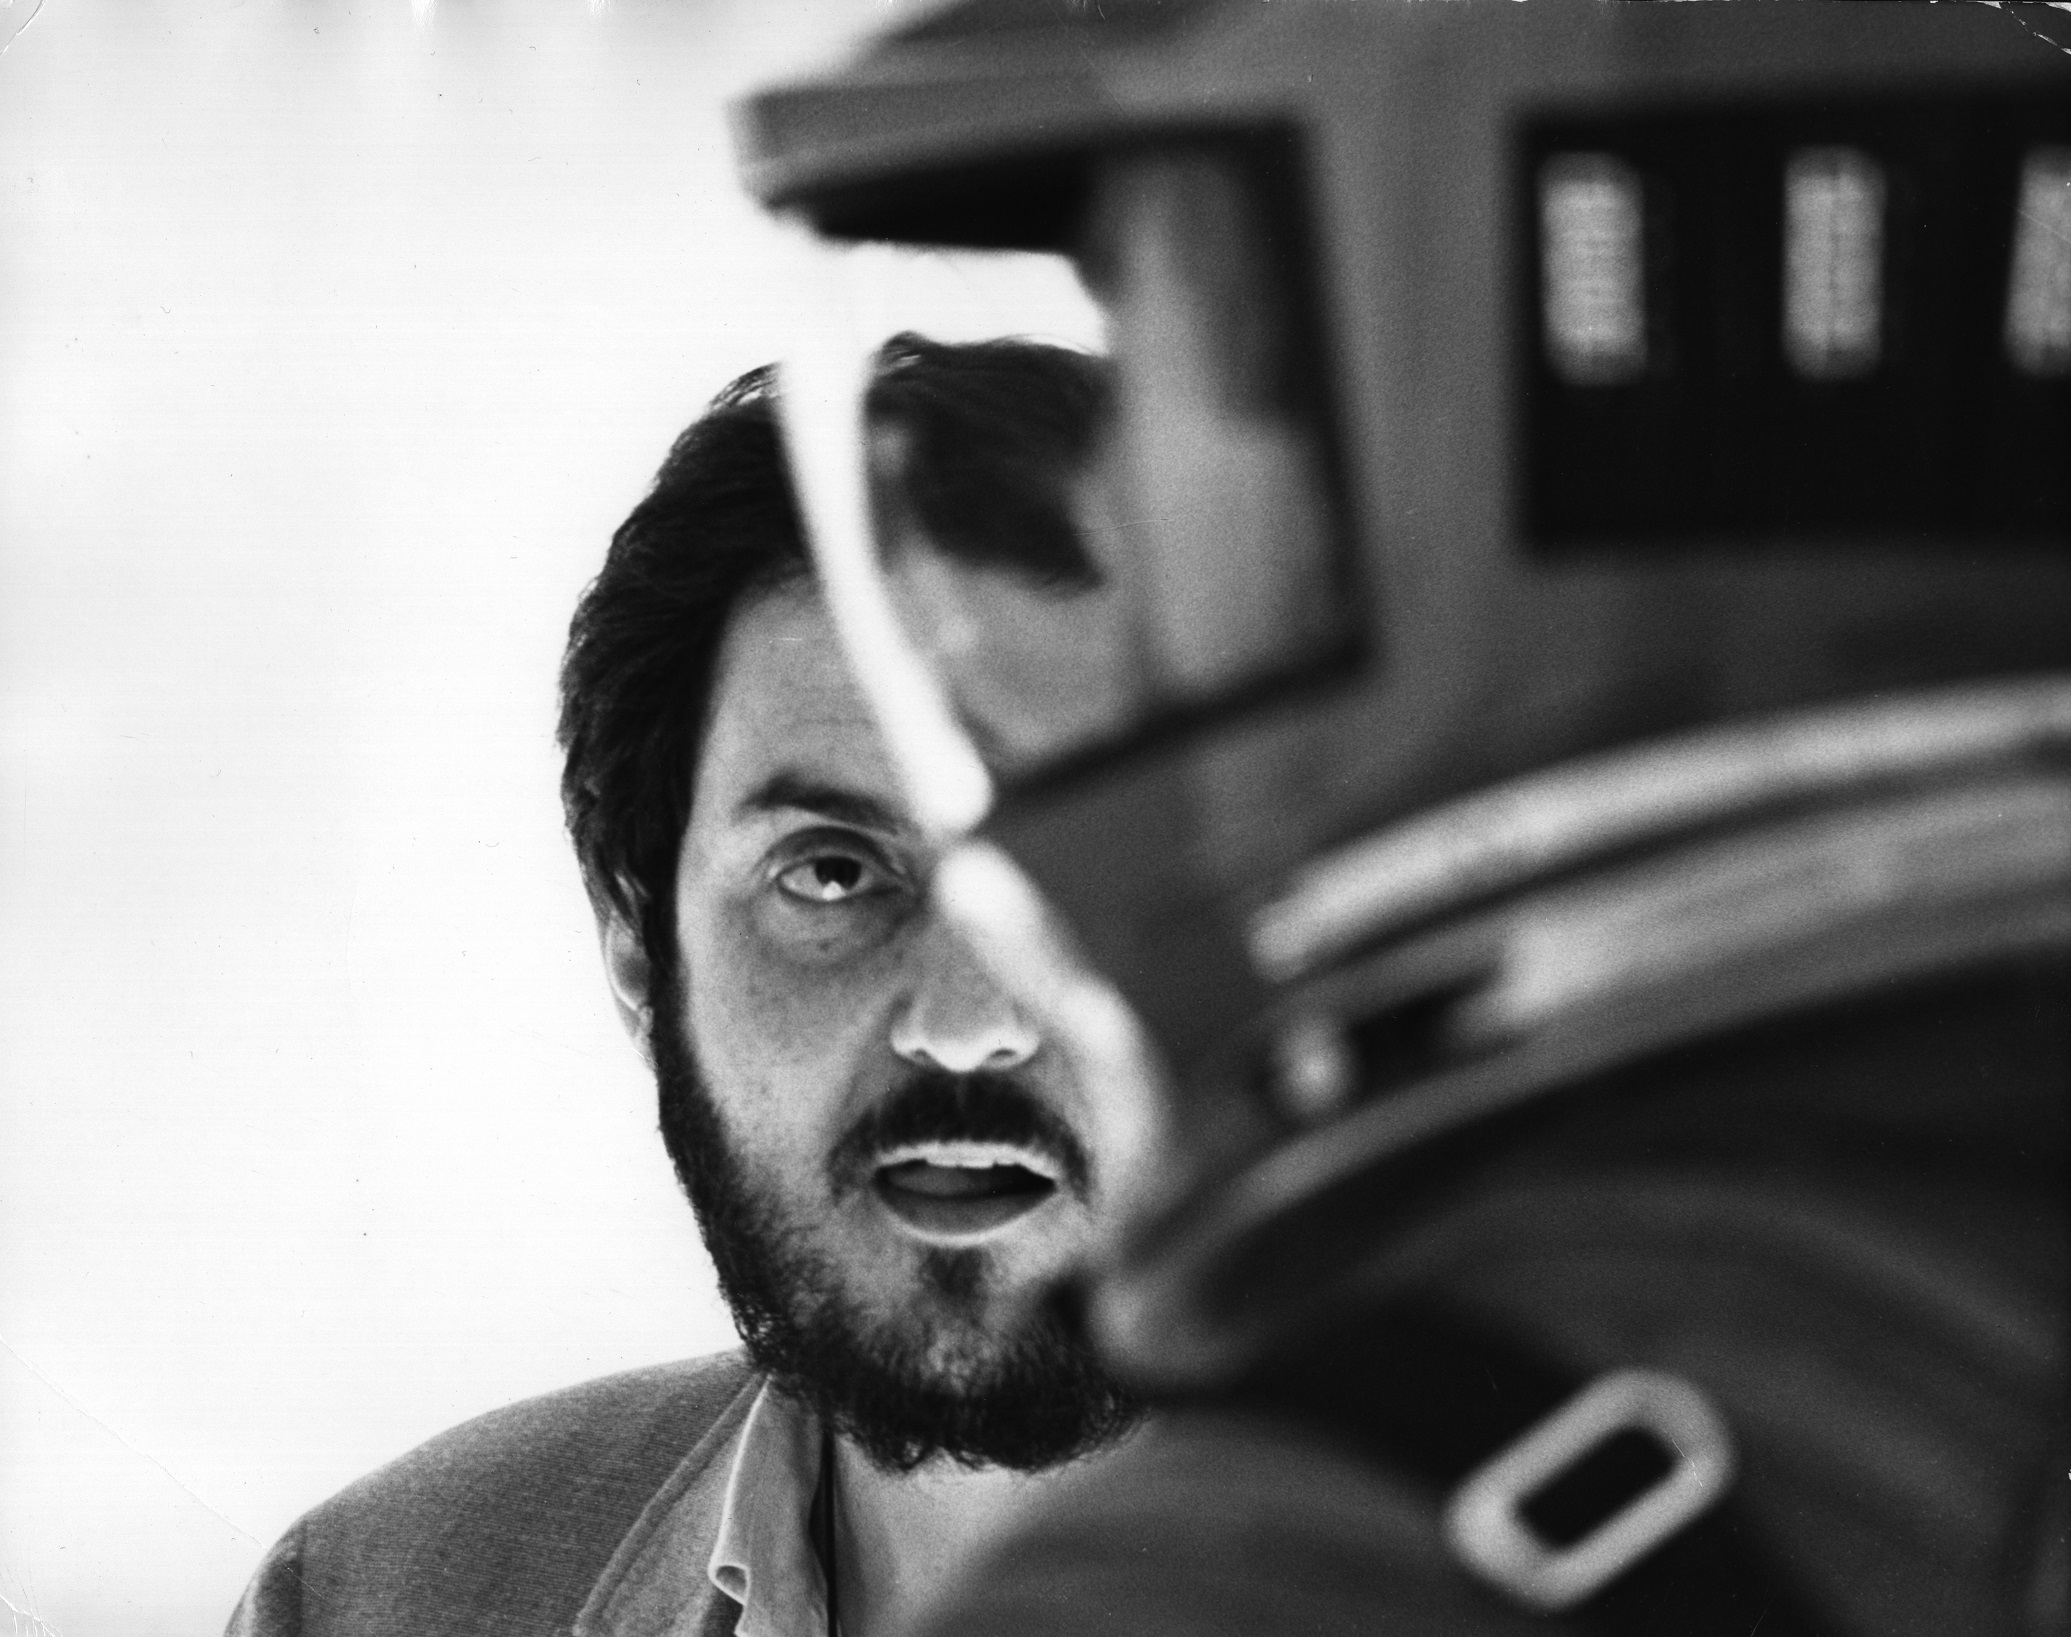 El director de cine Stanley Kubrick en uno de sus rodajes.